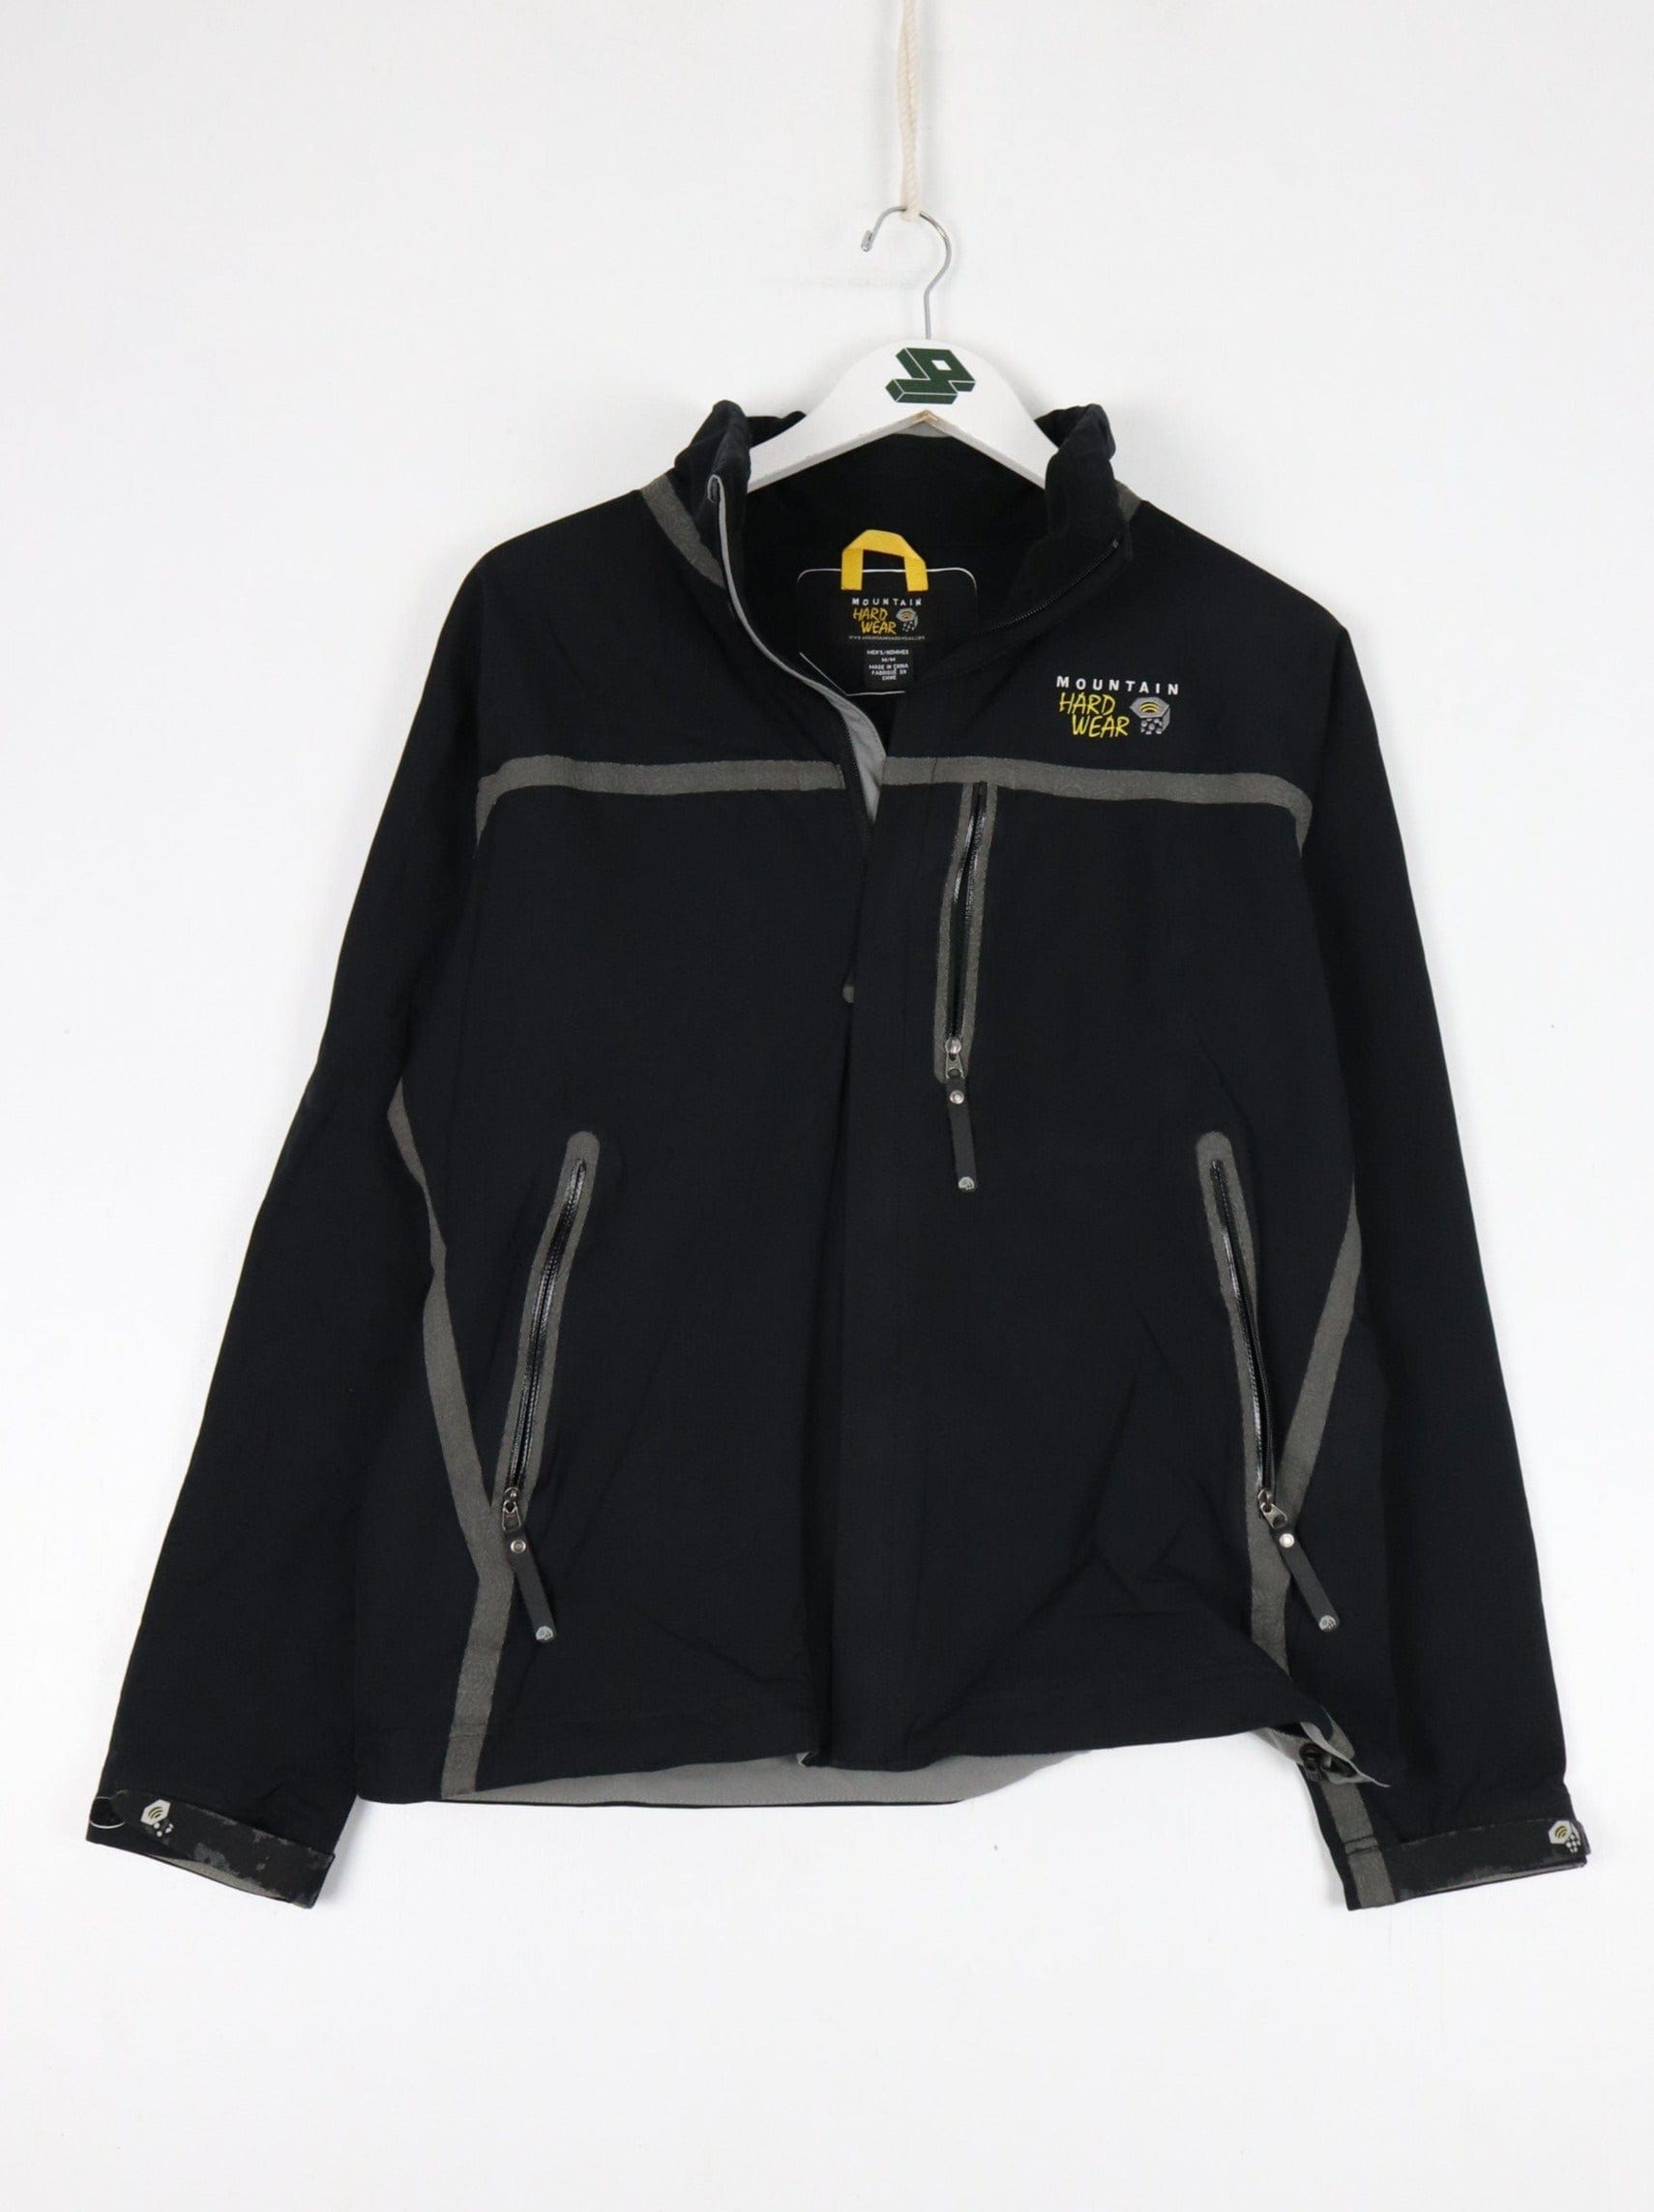 Mountain Hardwear Jacket Fits Mens Small Black Soft Shell Rain